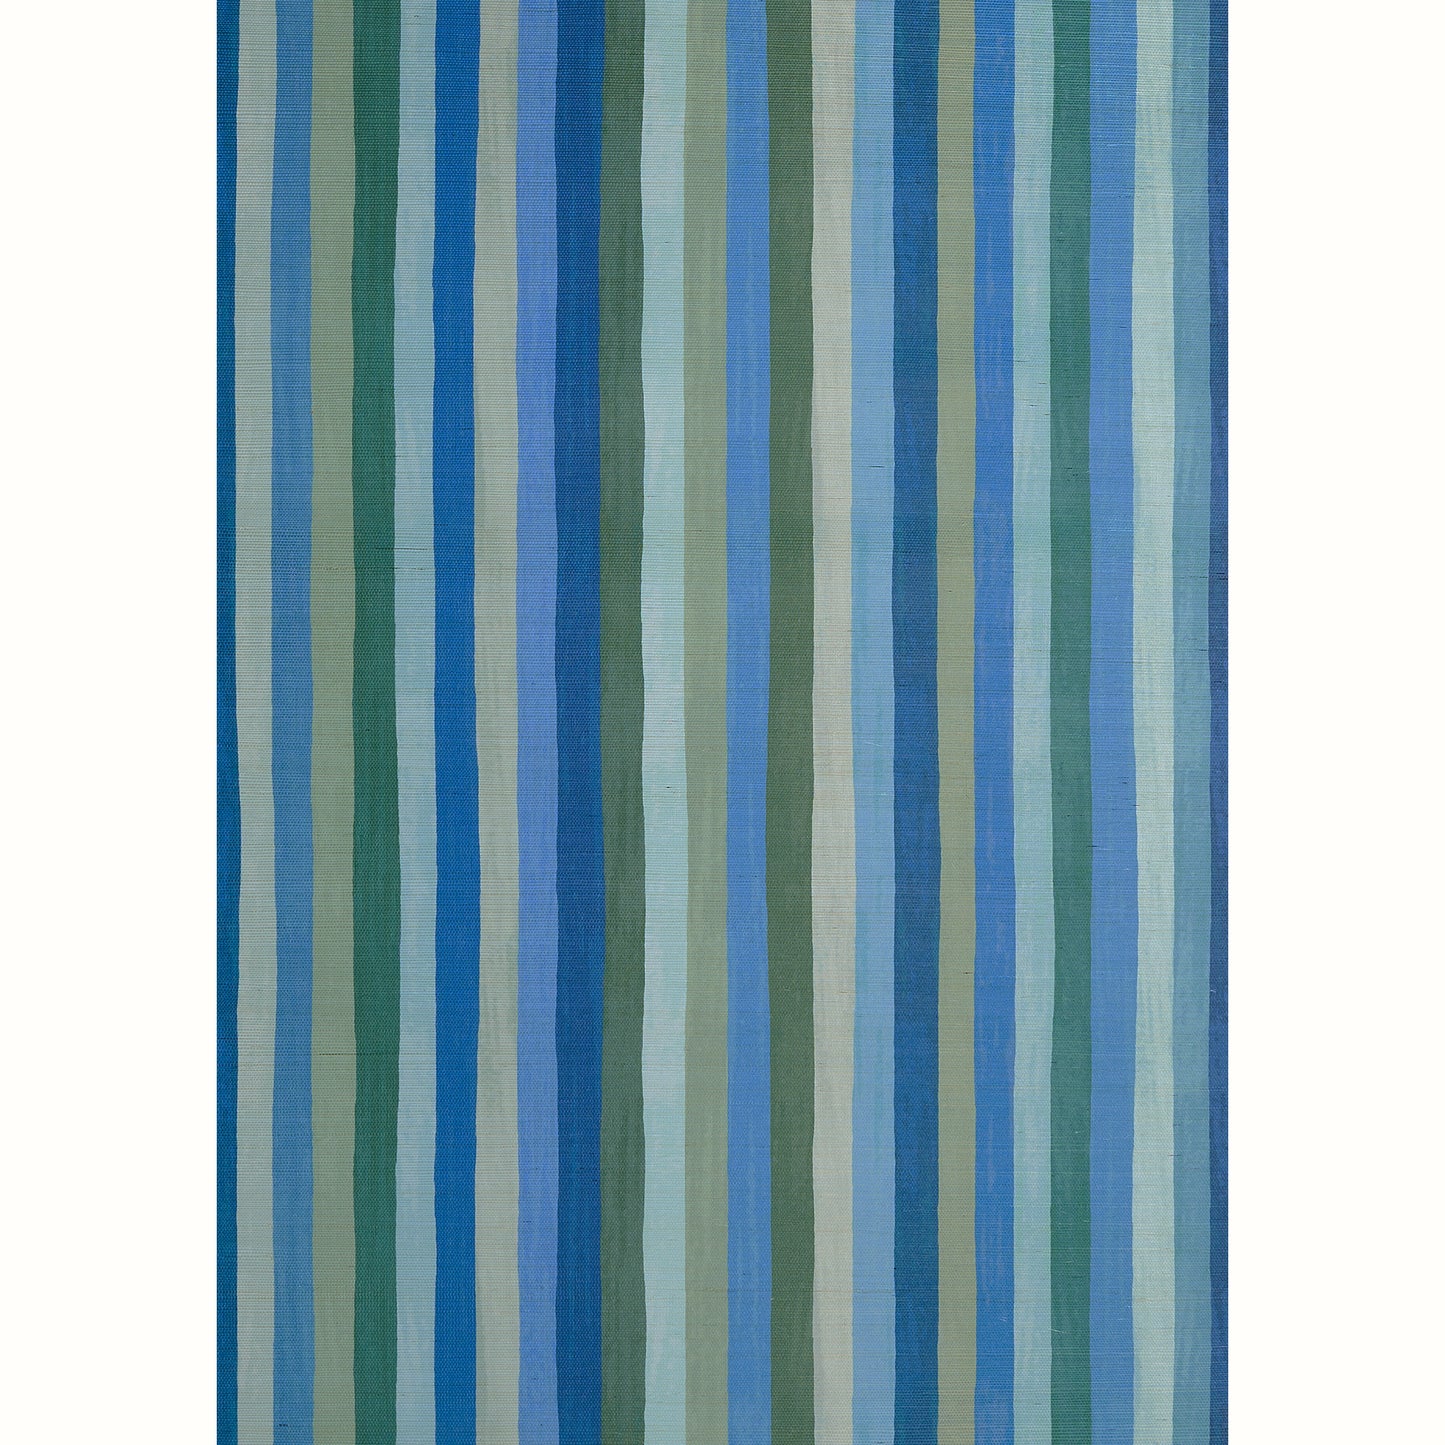 Jacob's Stripe - Blue/Green